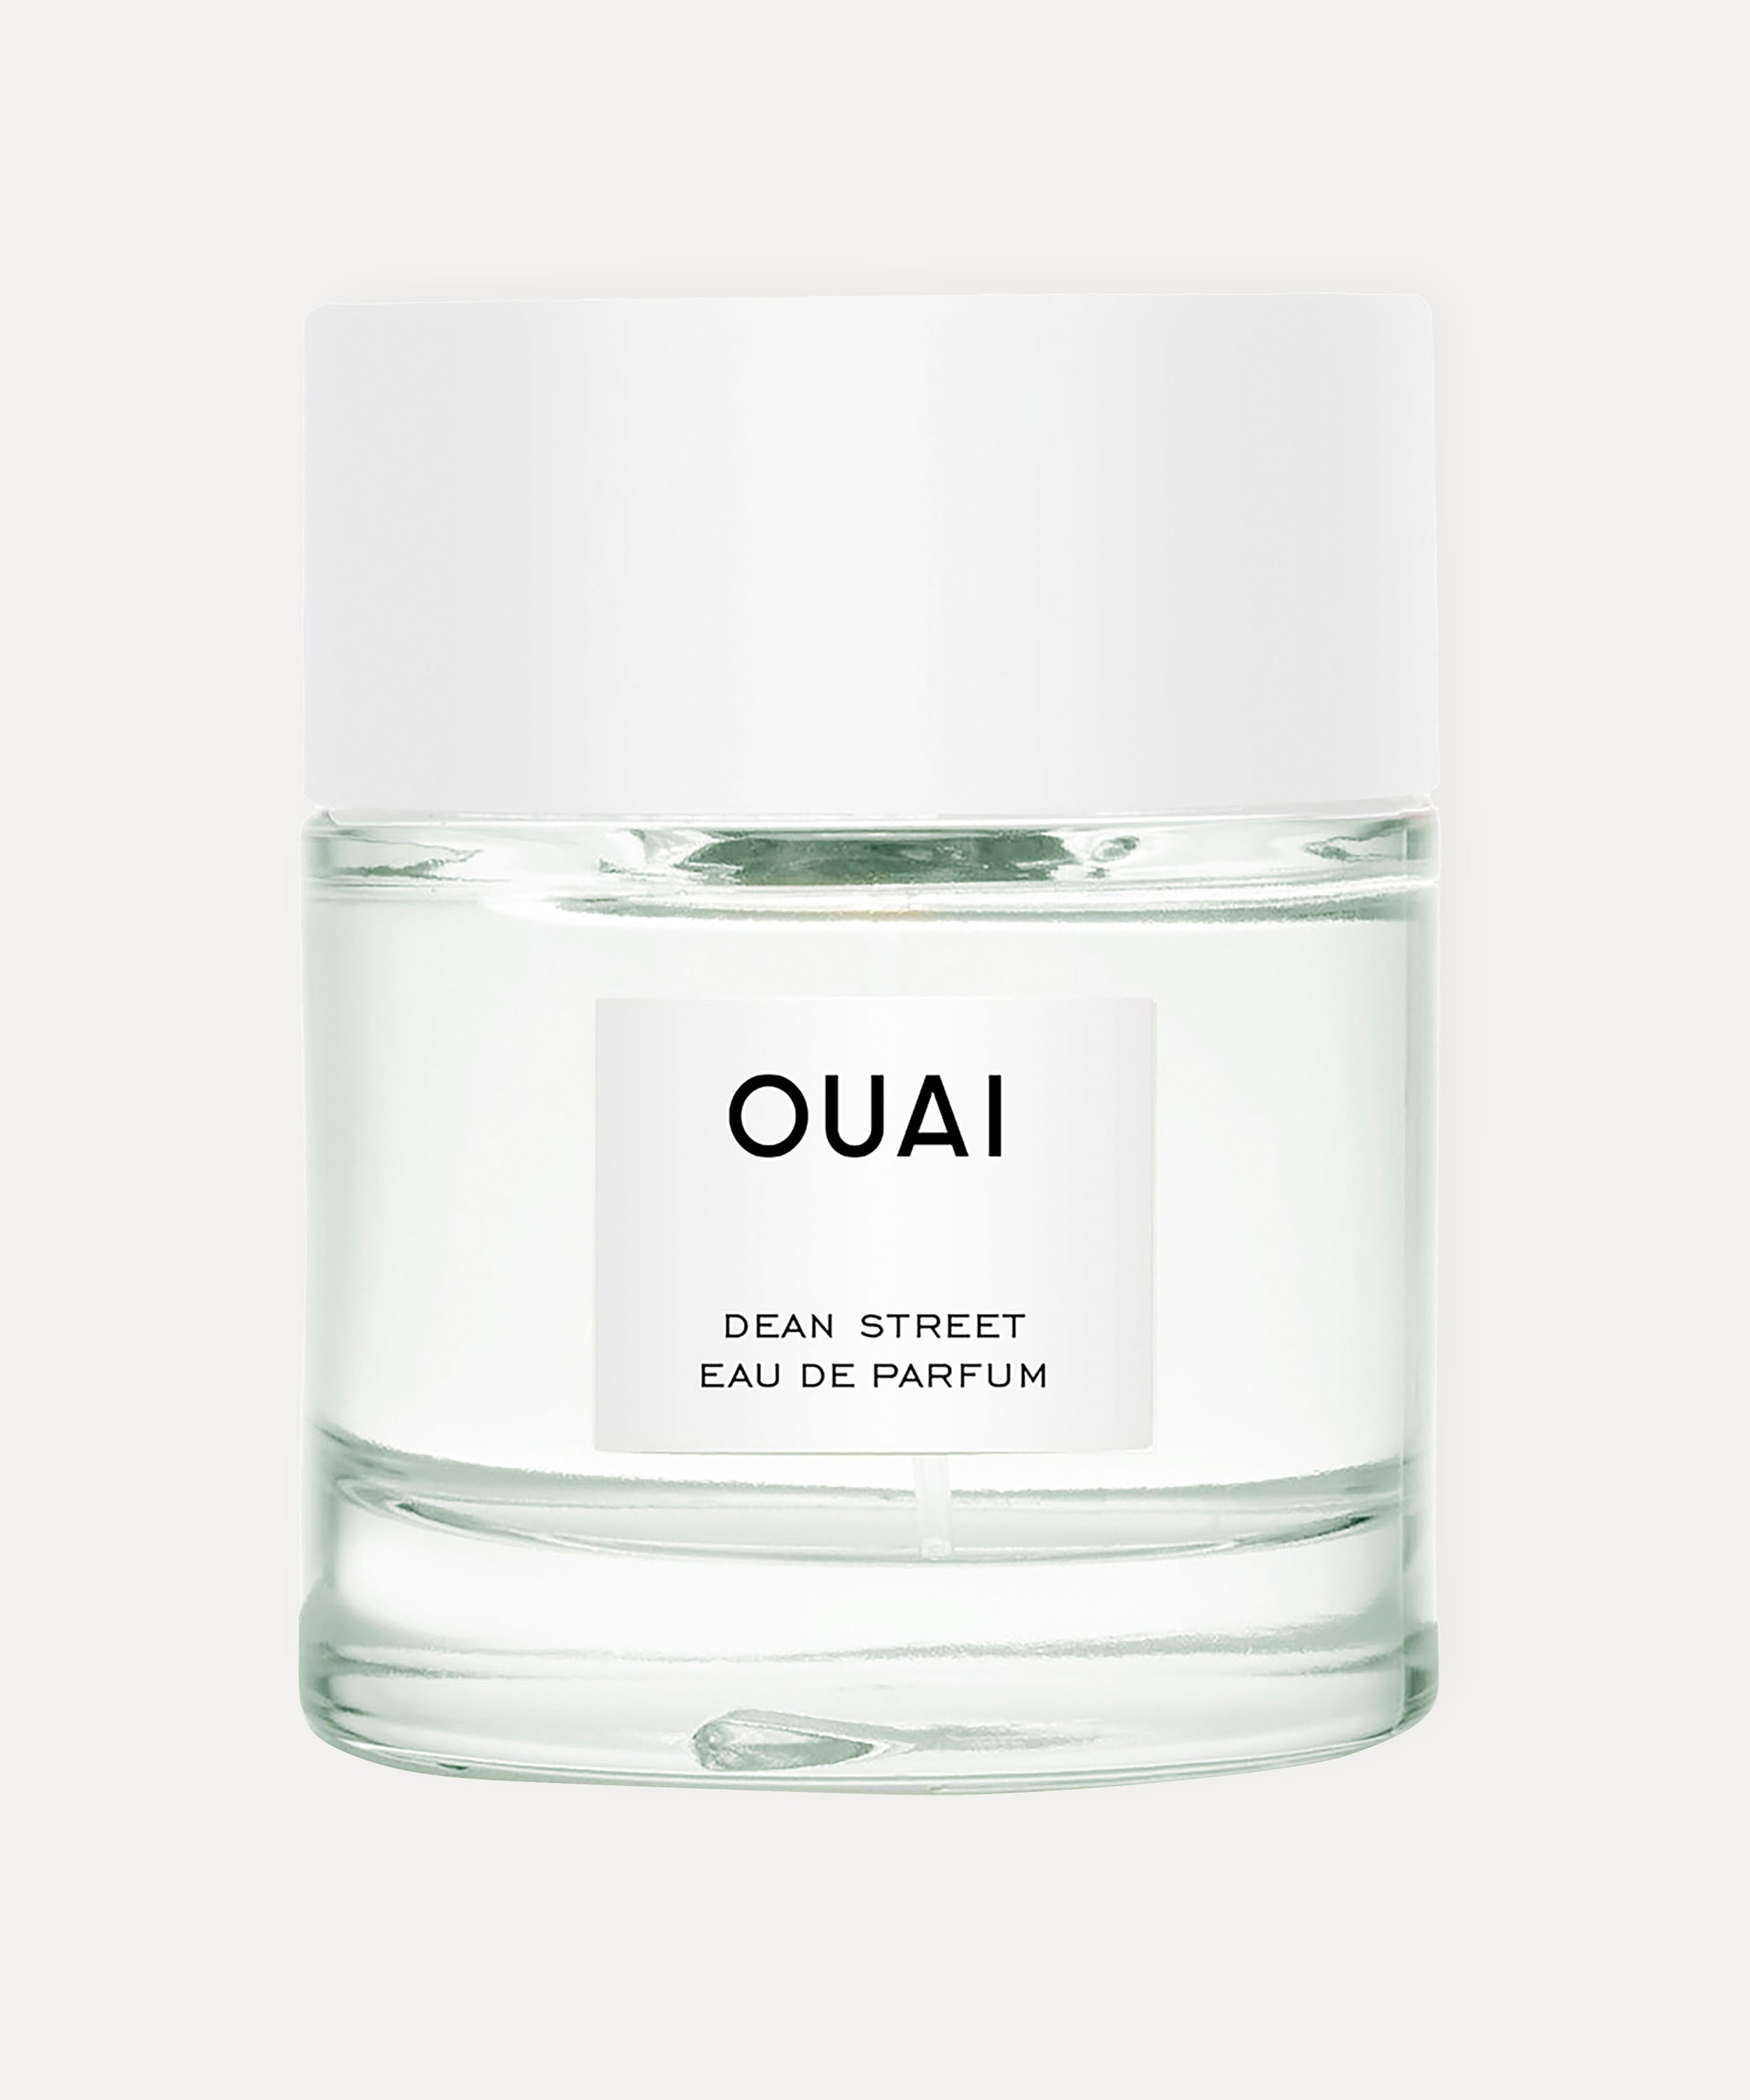 OUAI - Dean Street Eau de Parfum 50ml